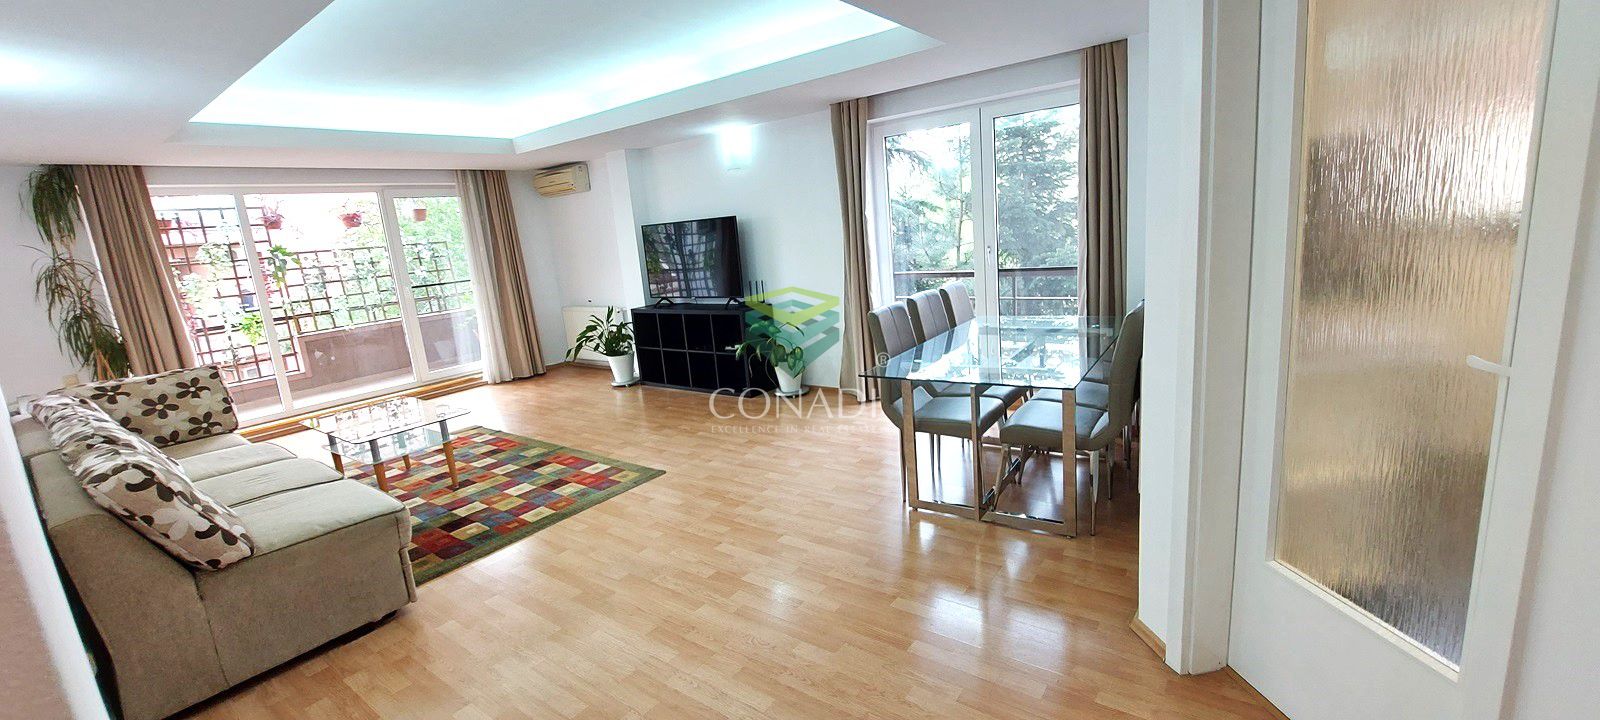 Herastrau, 4-room apartment for sale, 135 sqm built